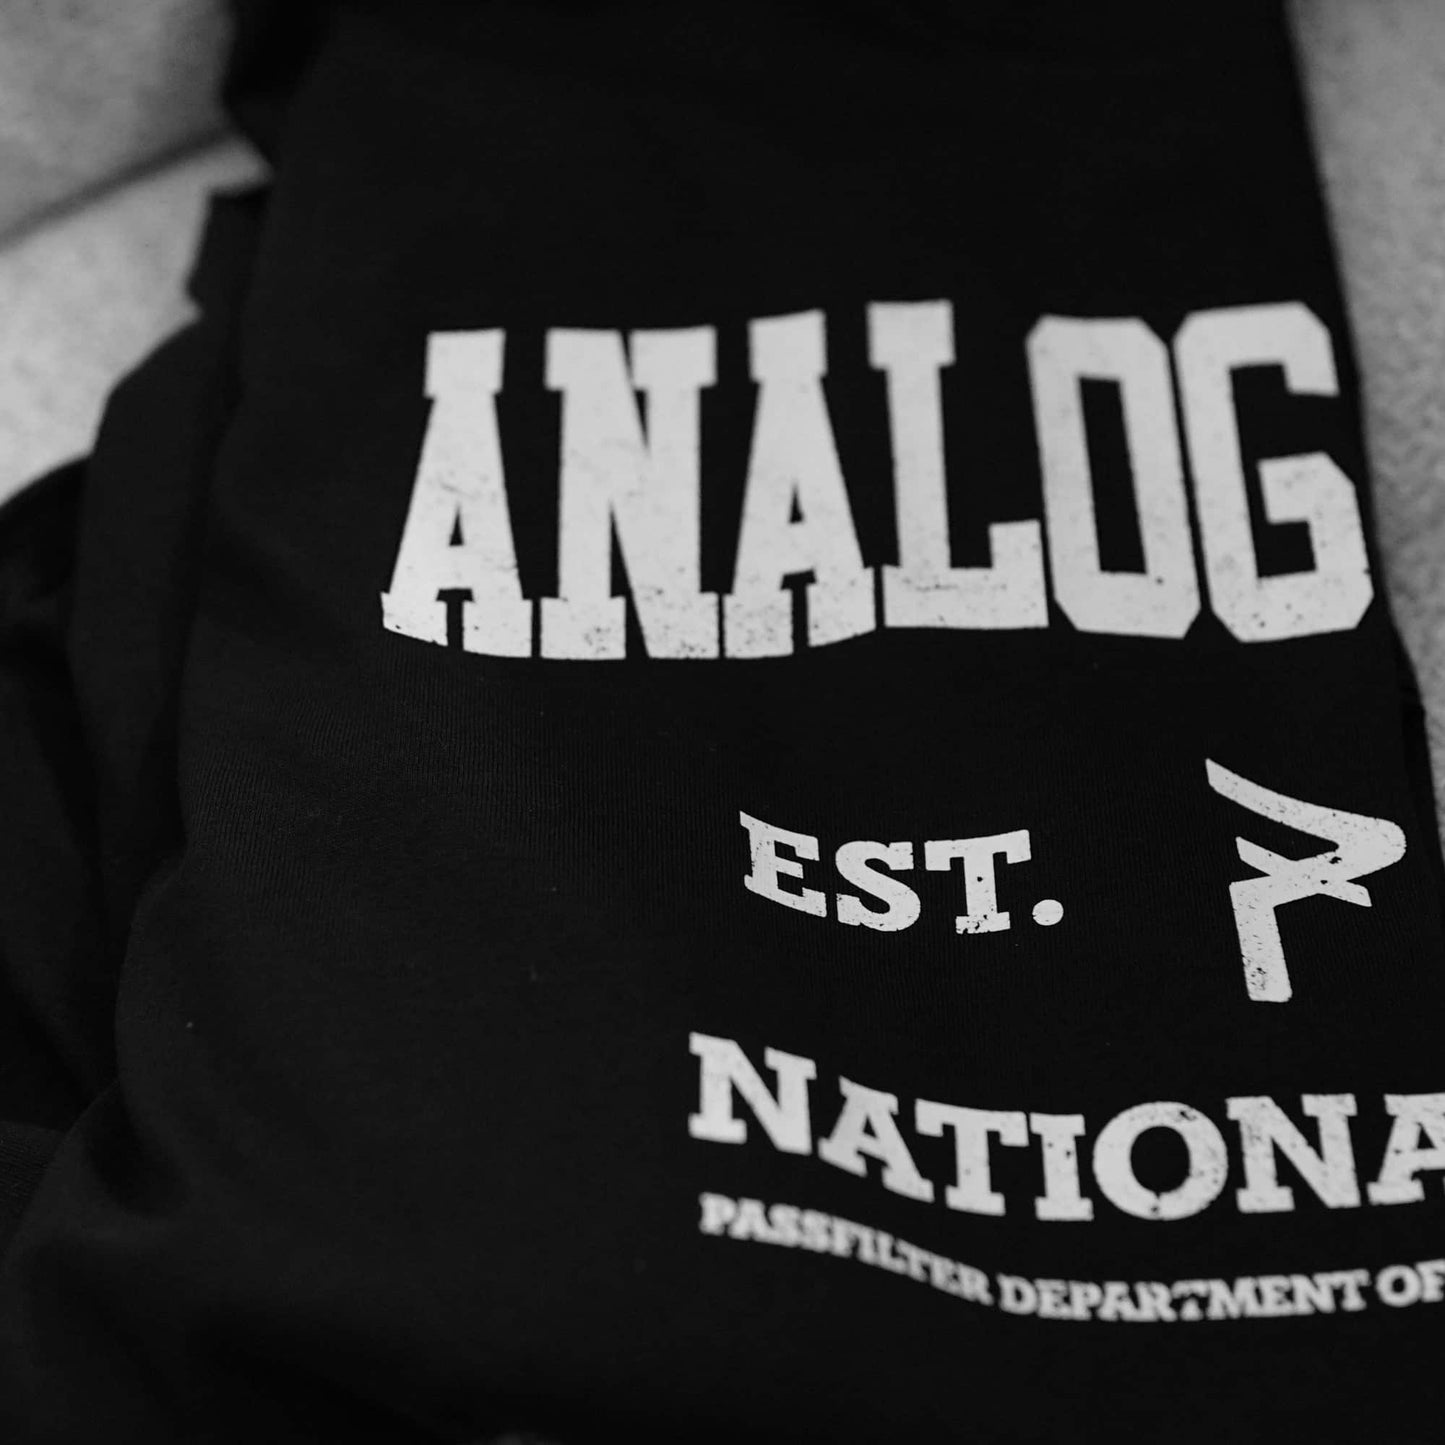 Analog Peak National Park Musicwear Unisex T-Shirt